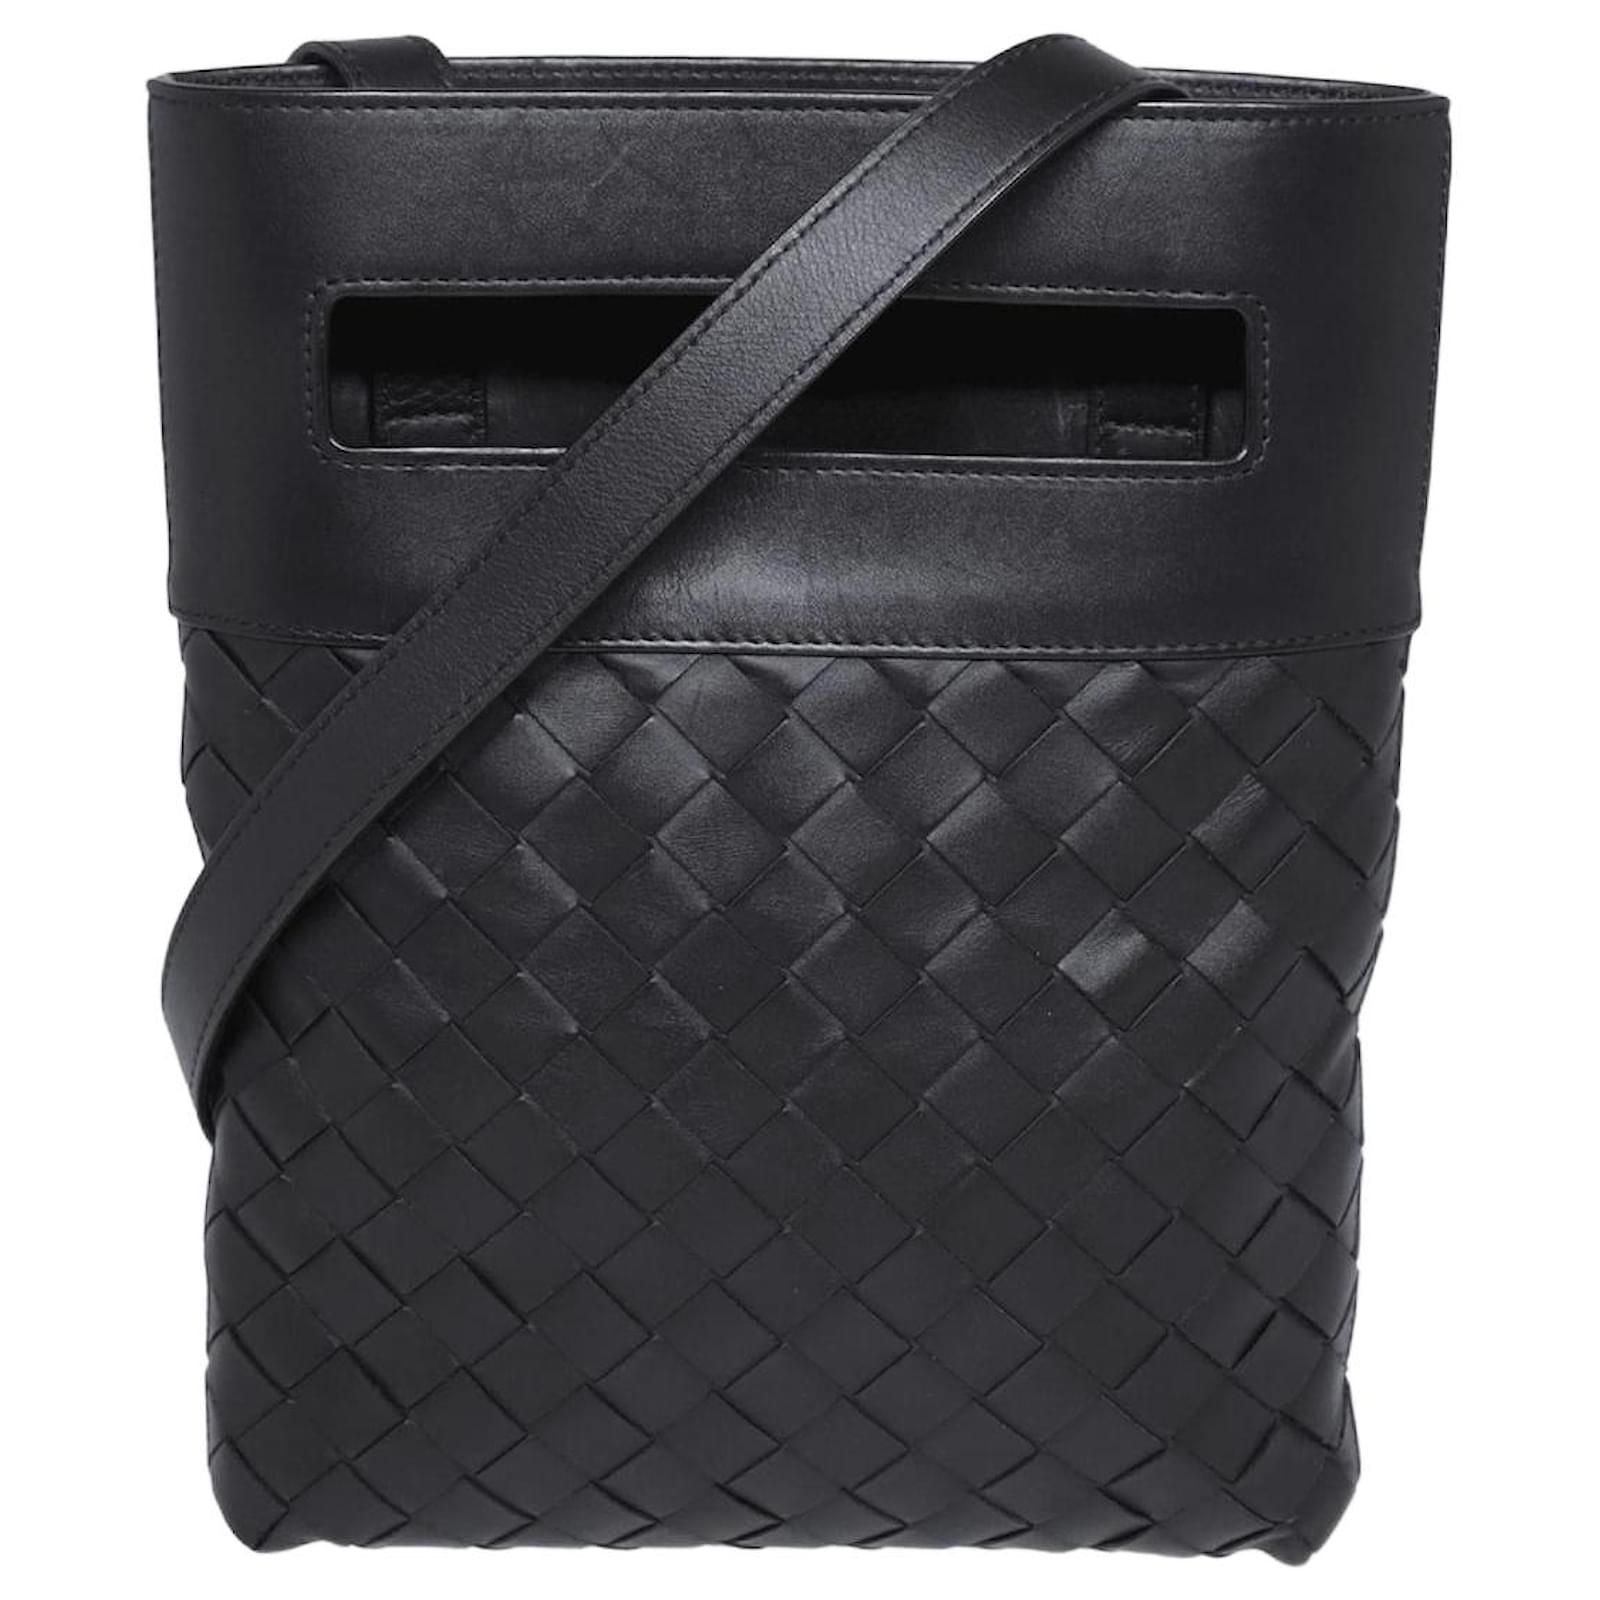 Bottega Veneta Men's Intrecciato Leather Messenger Bag